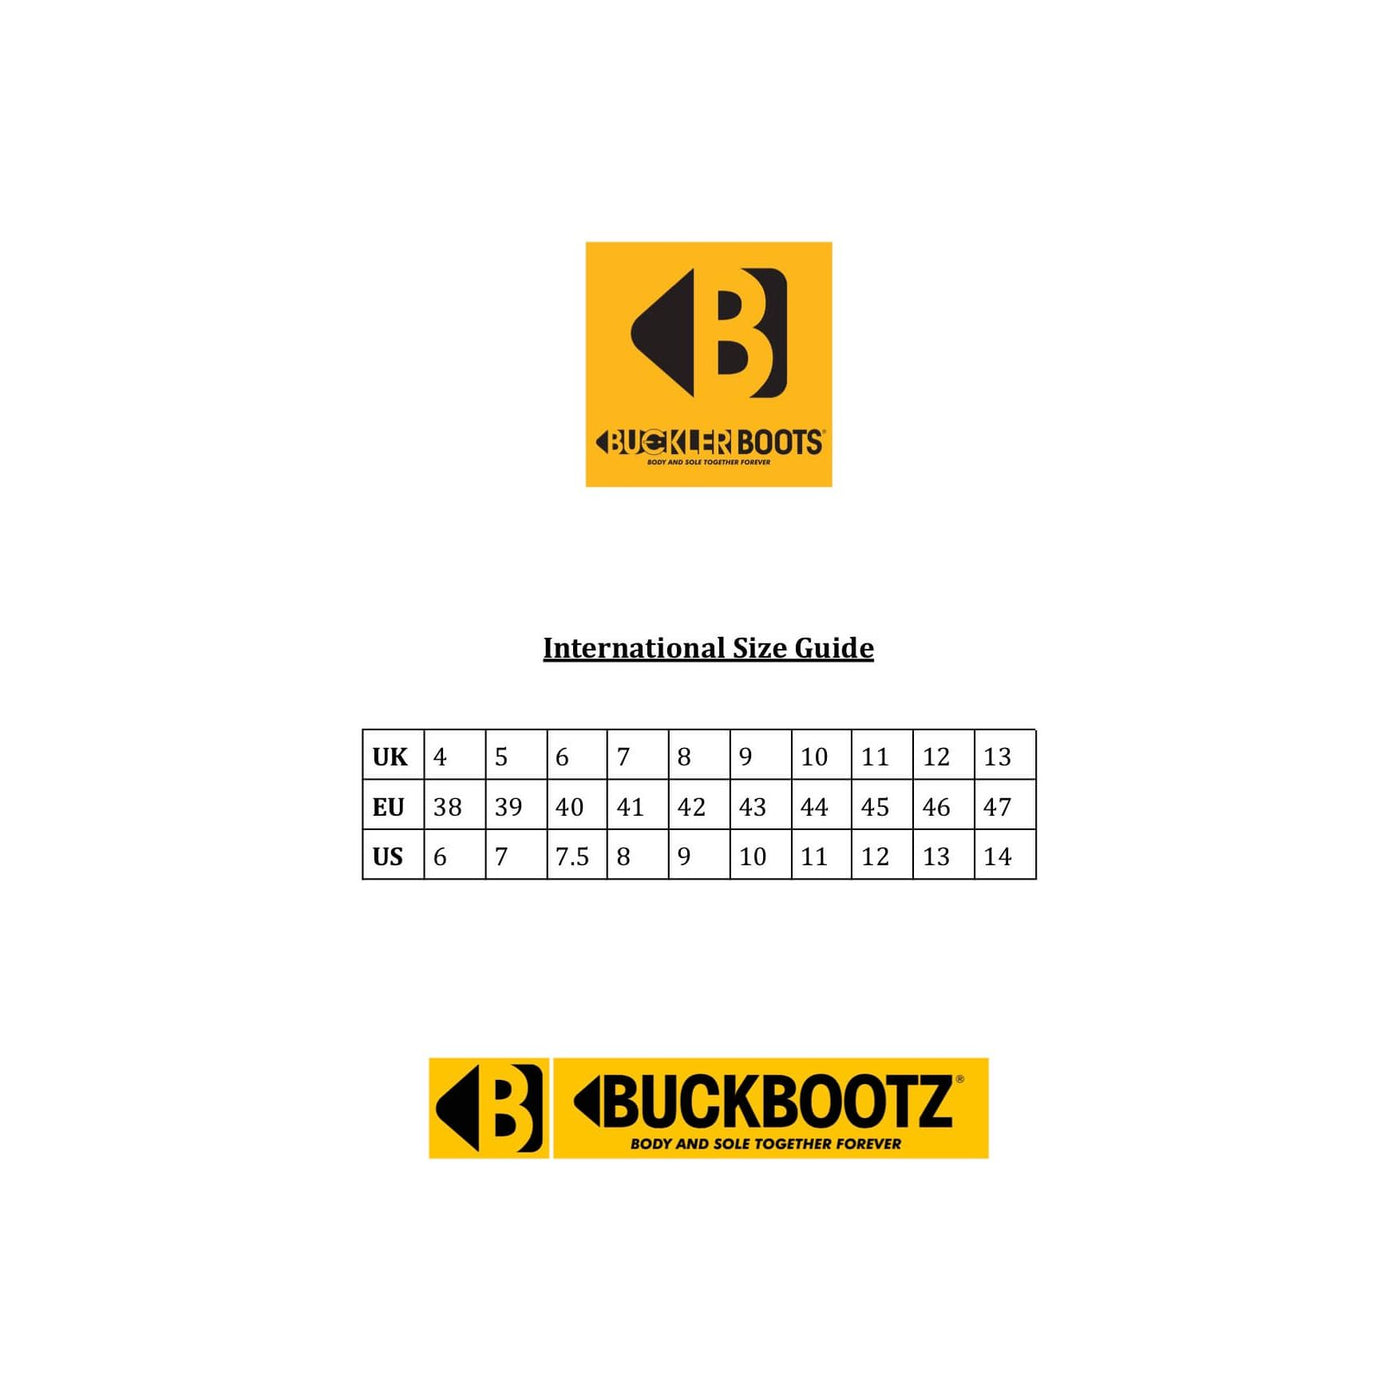 Buckbootz B1990 Safety Dealer Boots Goodyear Welted Buckler Boots